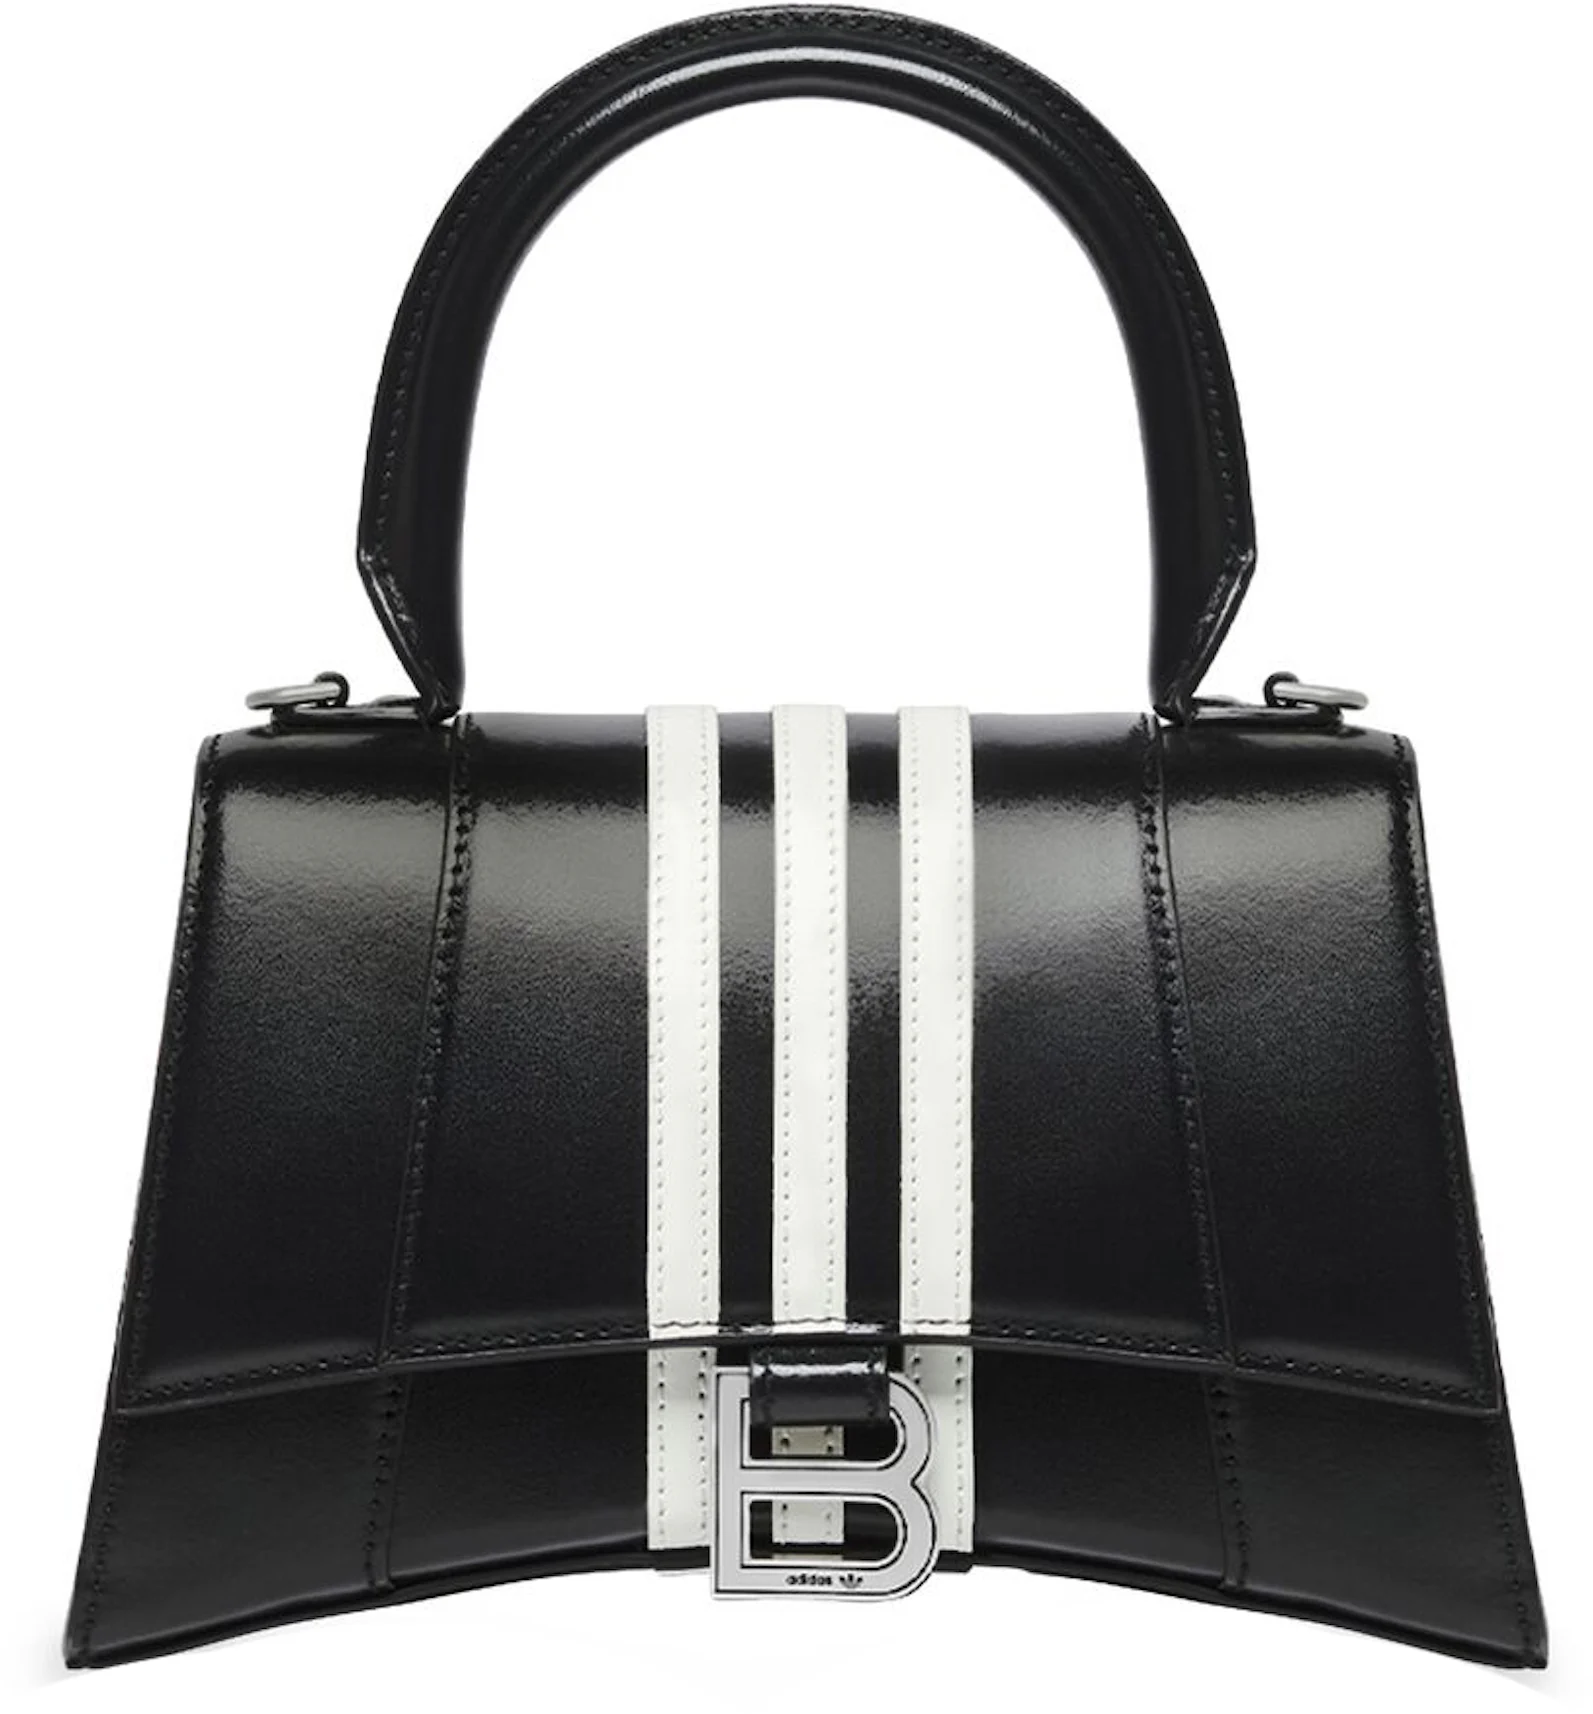 Balenciaga x adidas Hourglass Small Handbag Black in Shiny Box Calfskin ...